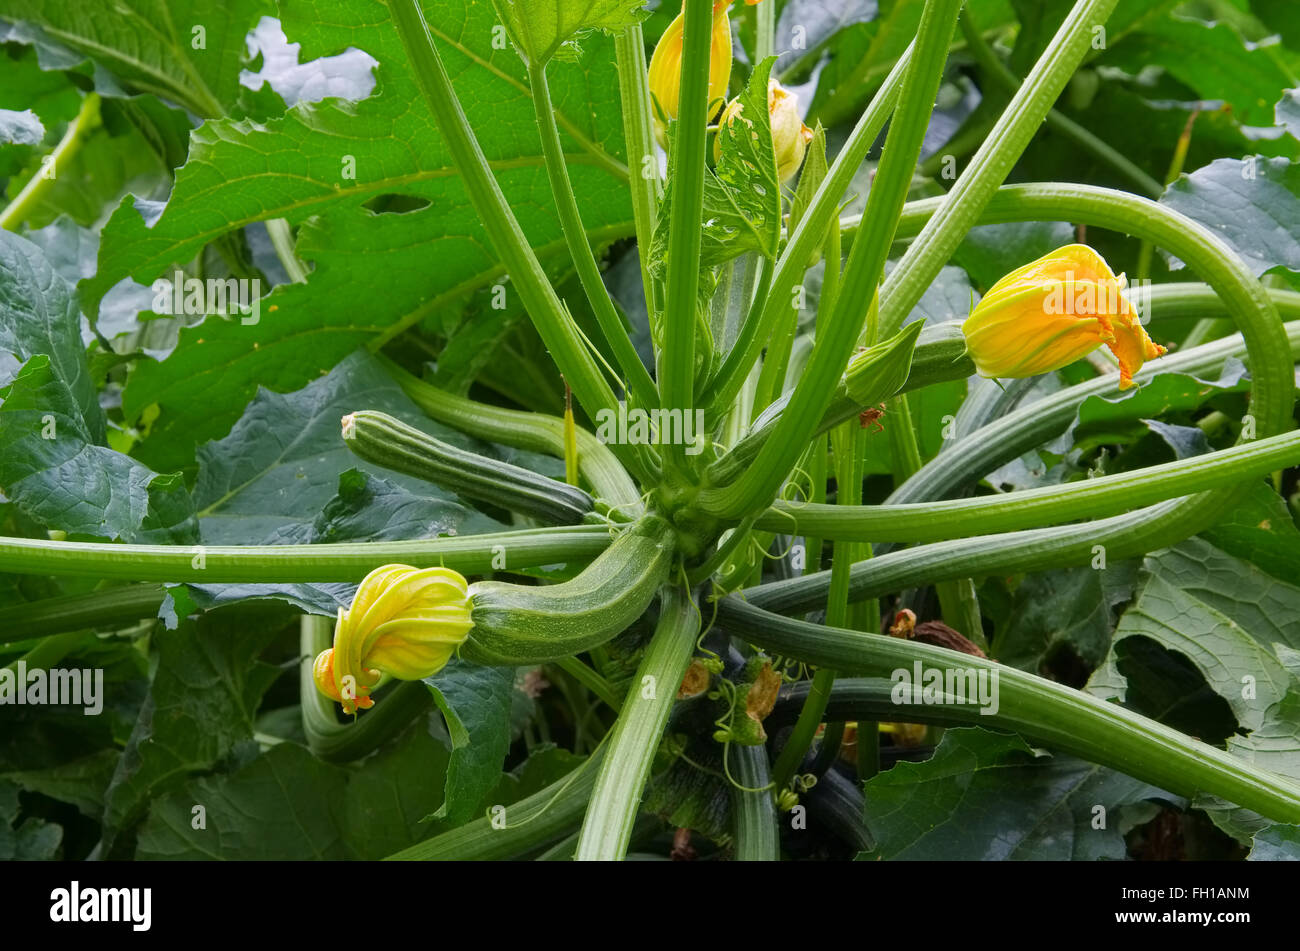 Zucchini Pflanze im garten - courgette plant and vegetable in garden Stock Photo